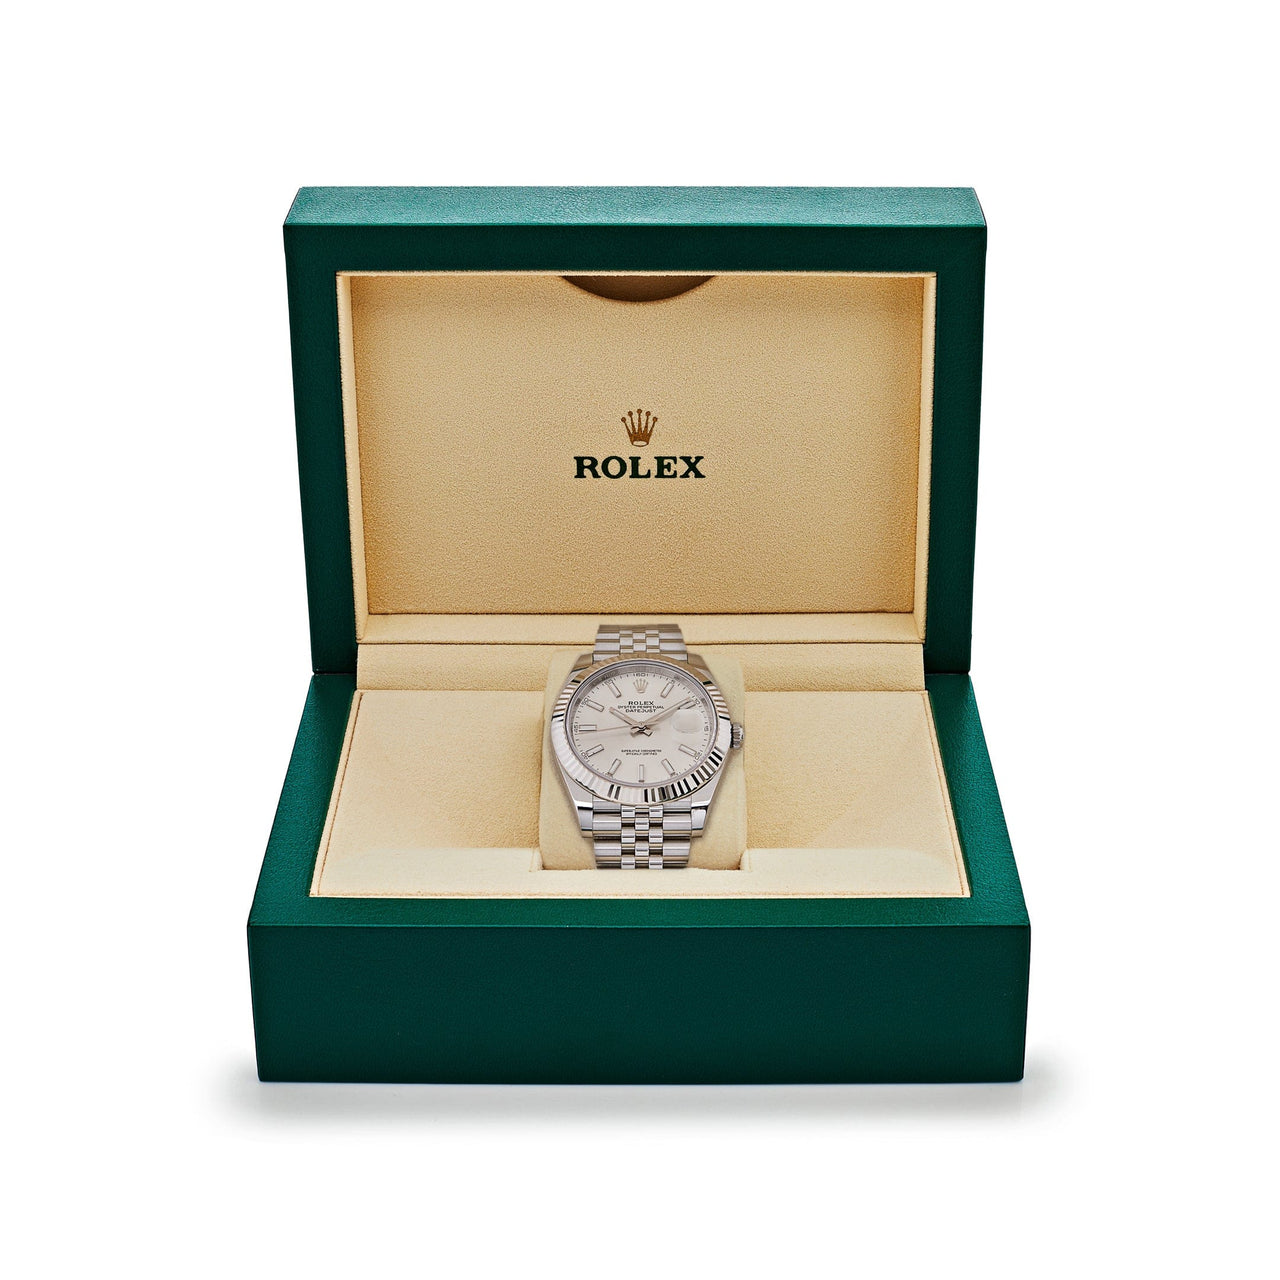 Luxury Watch Rolex Datejust 41mm White Gold/ Steel Jubilee Silver Dial 126334 Wrist Aficionado